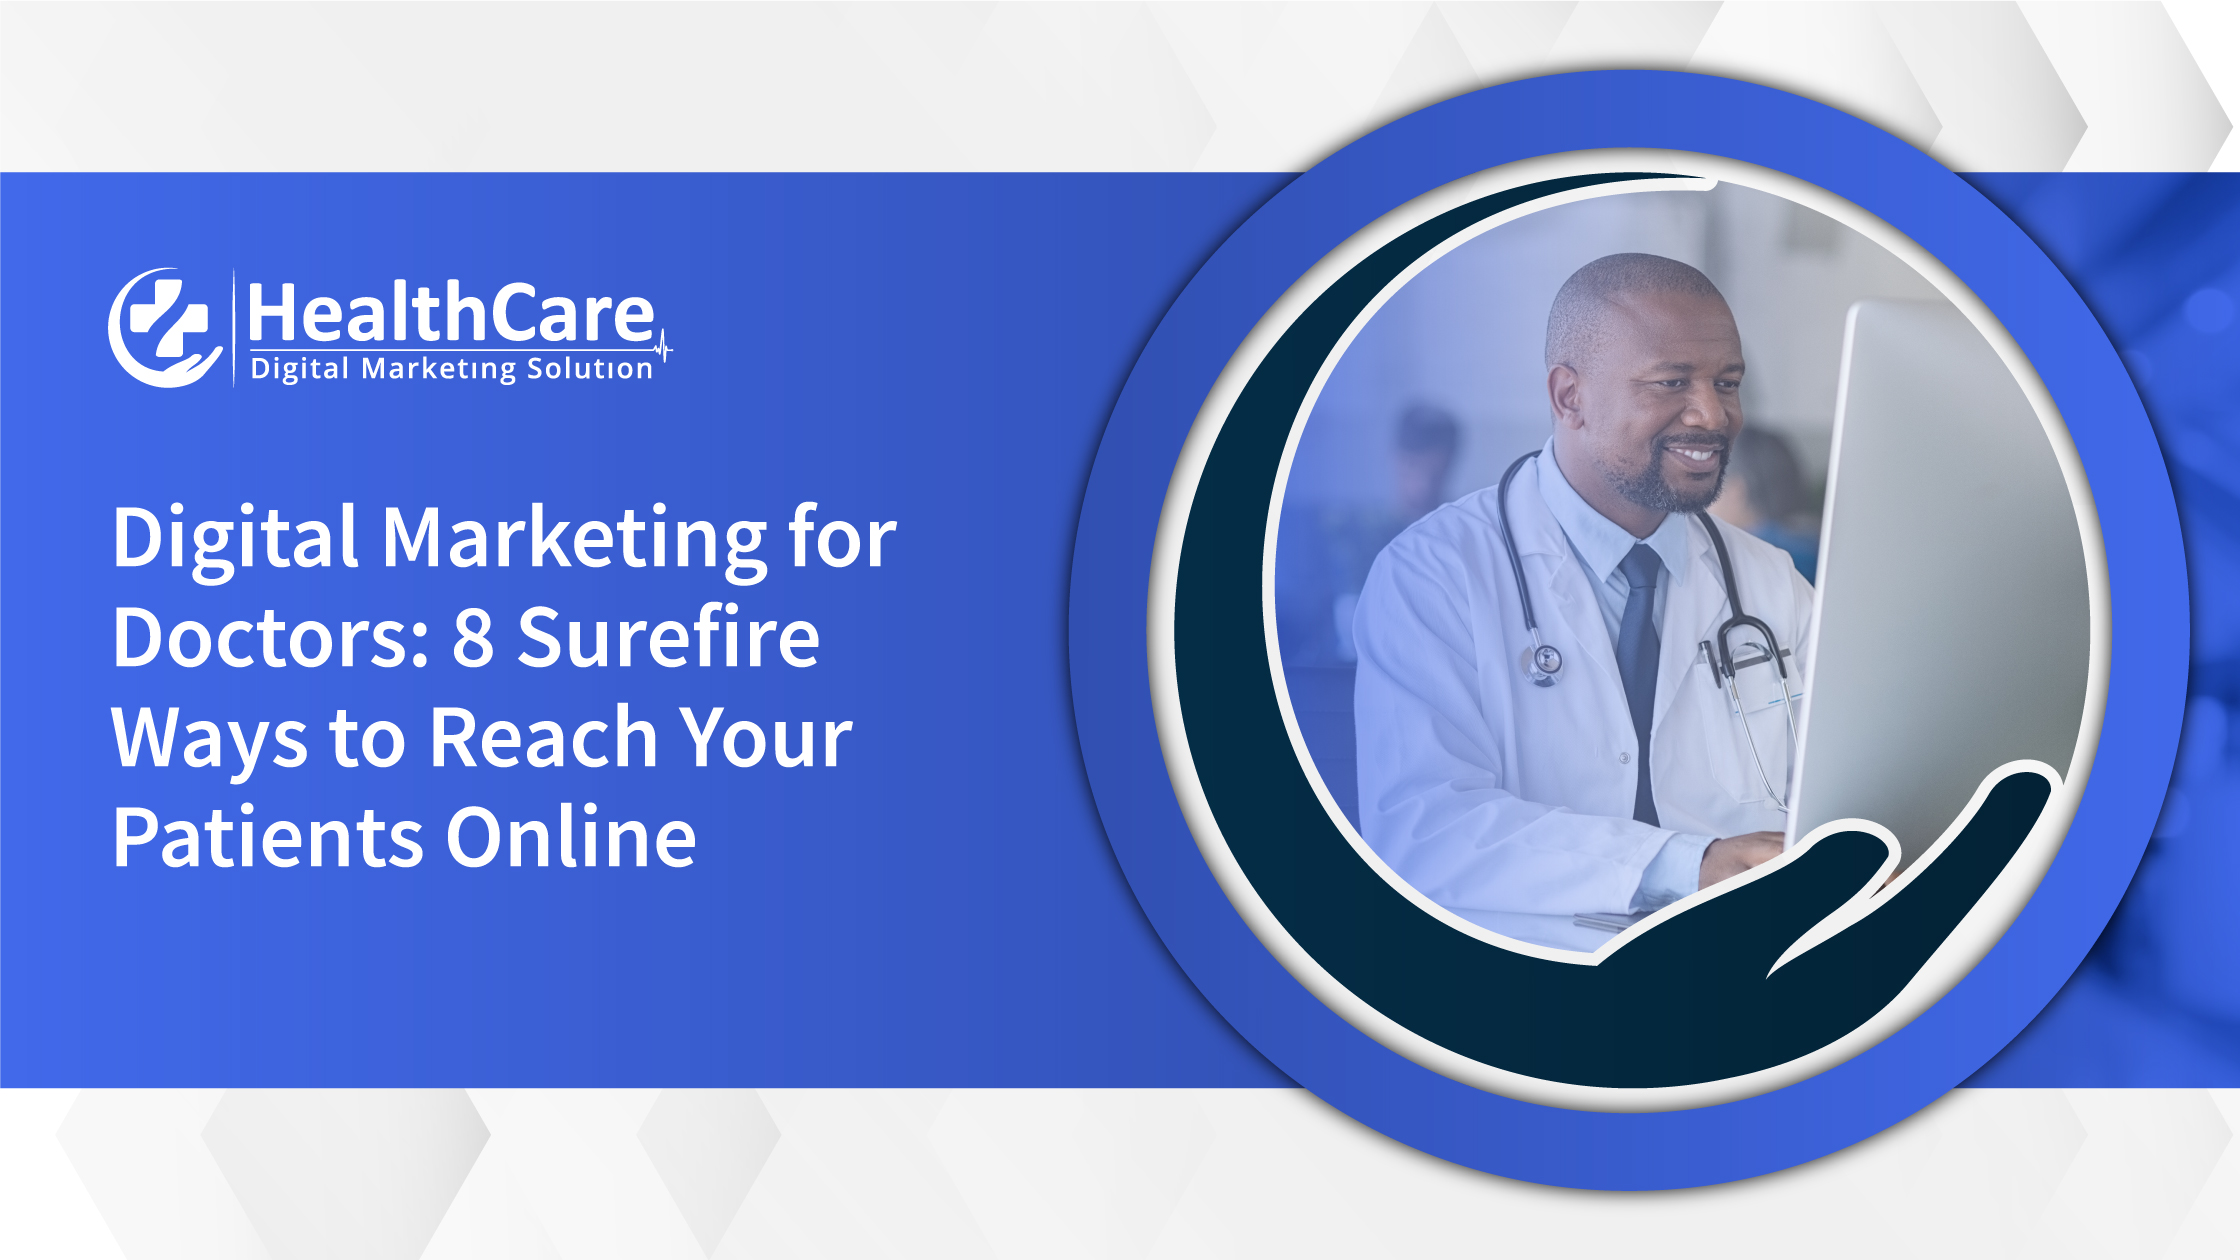 Digital Marketing for Doctors in India: 8 Surefire Ways to Reach Your Patients Online